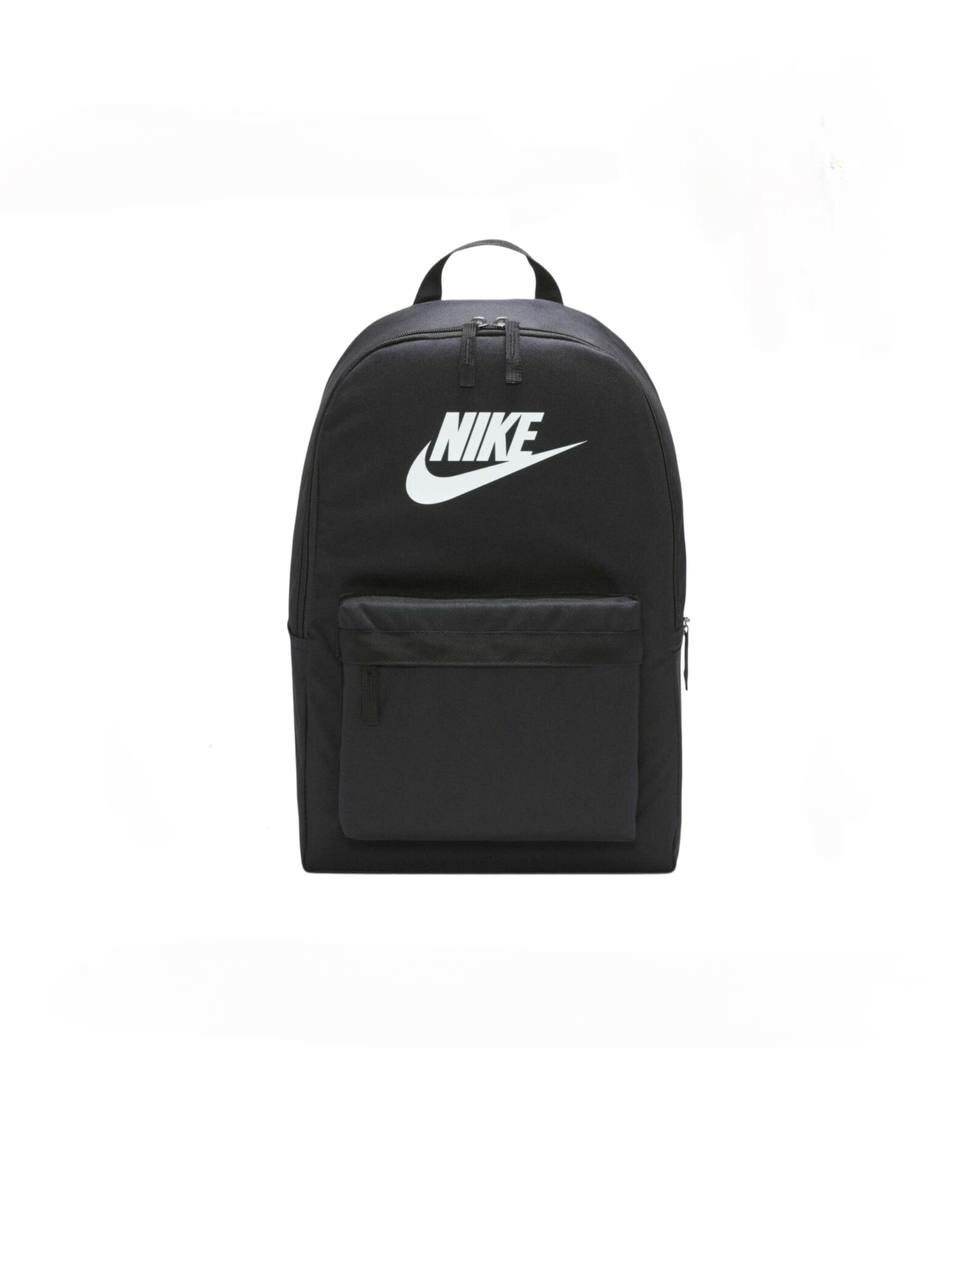 Рюкзак Nike Heritage Backpack